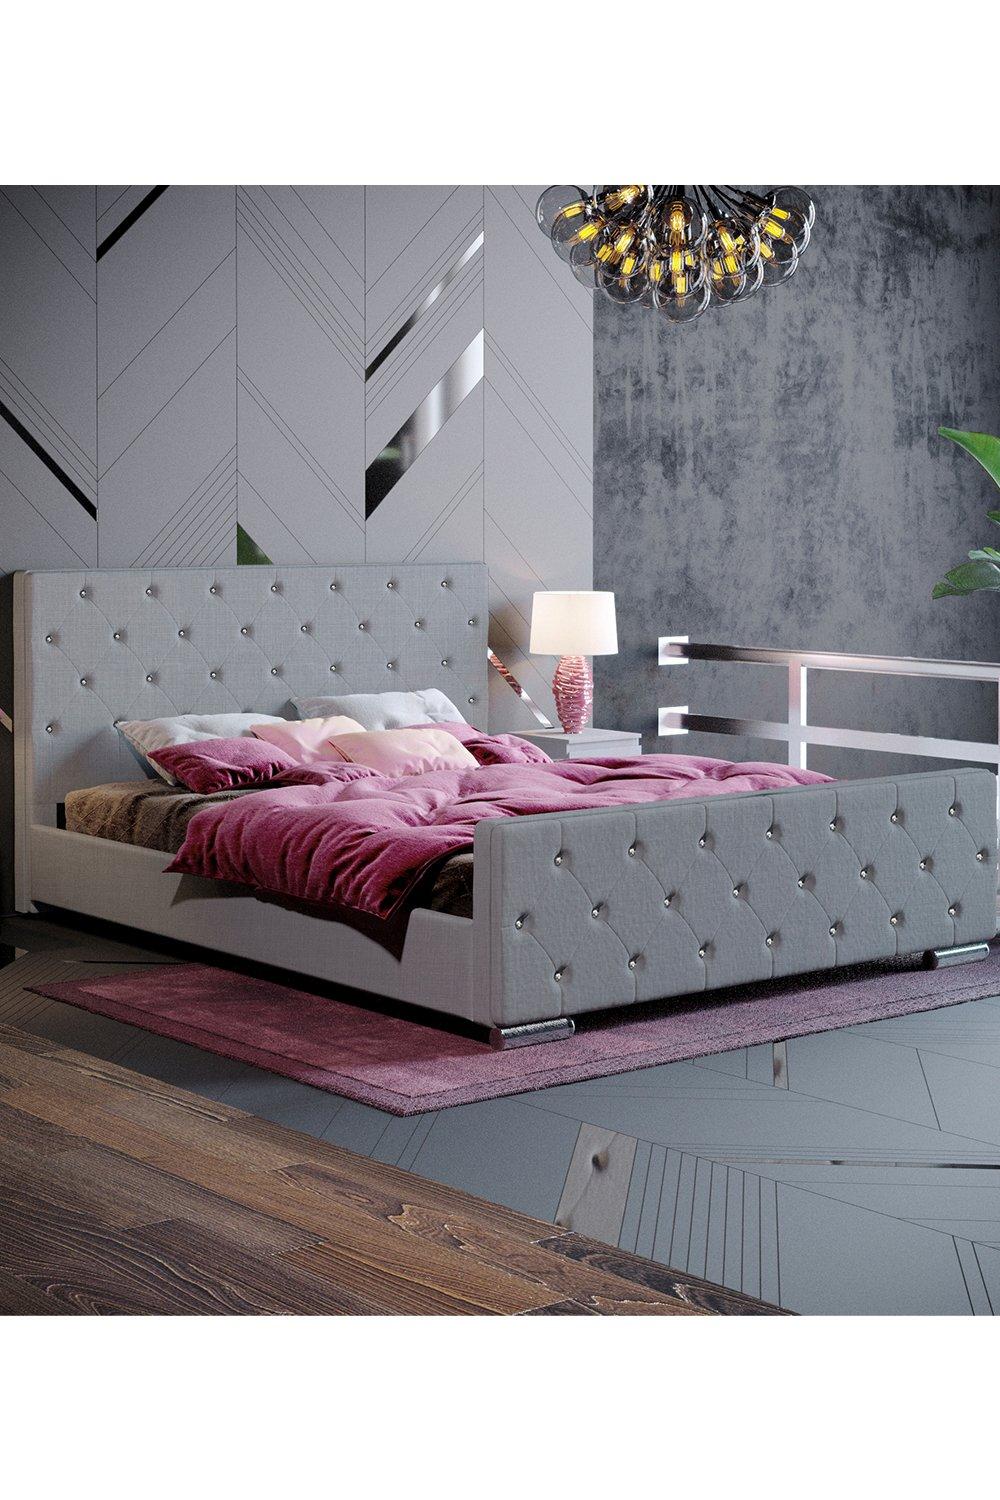 Vida Designs Arabella King Size Bed Linen Fabric 950 x 1580 x 2180 mm